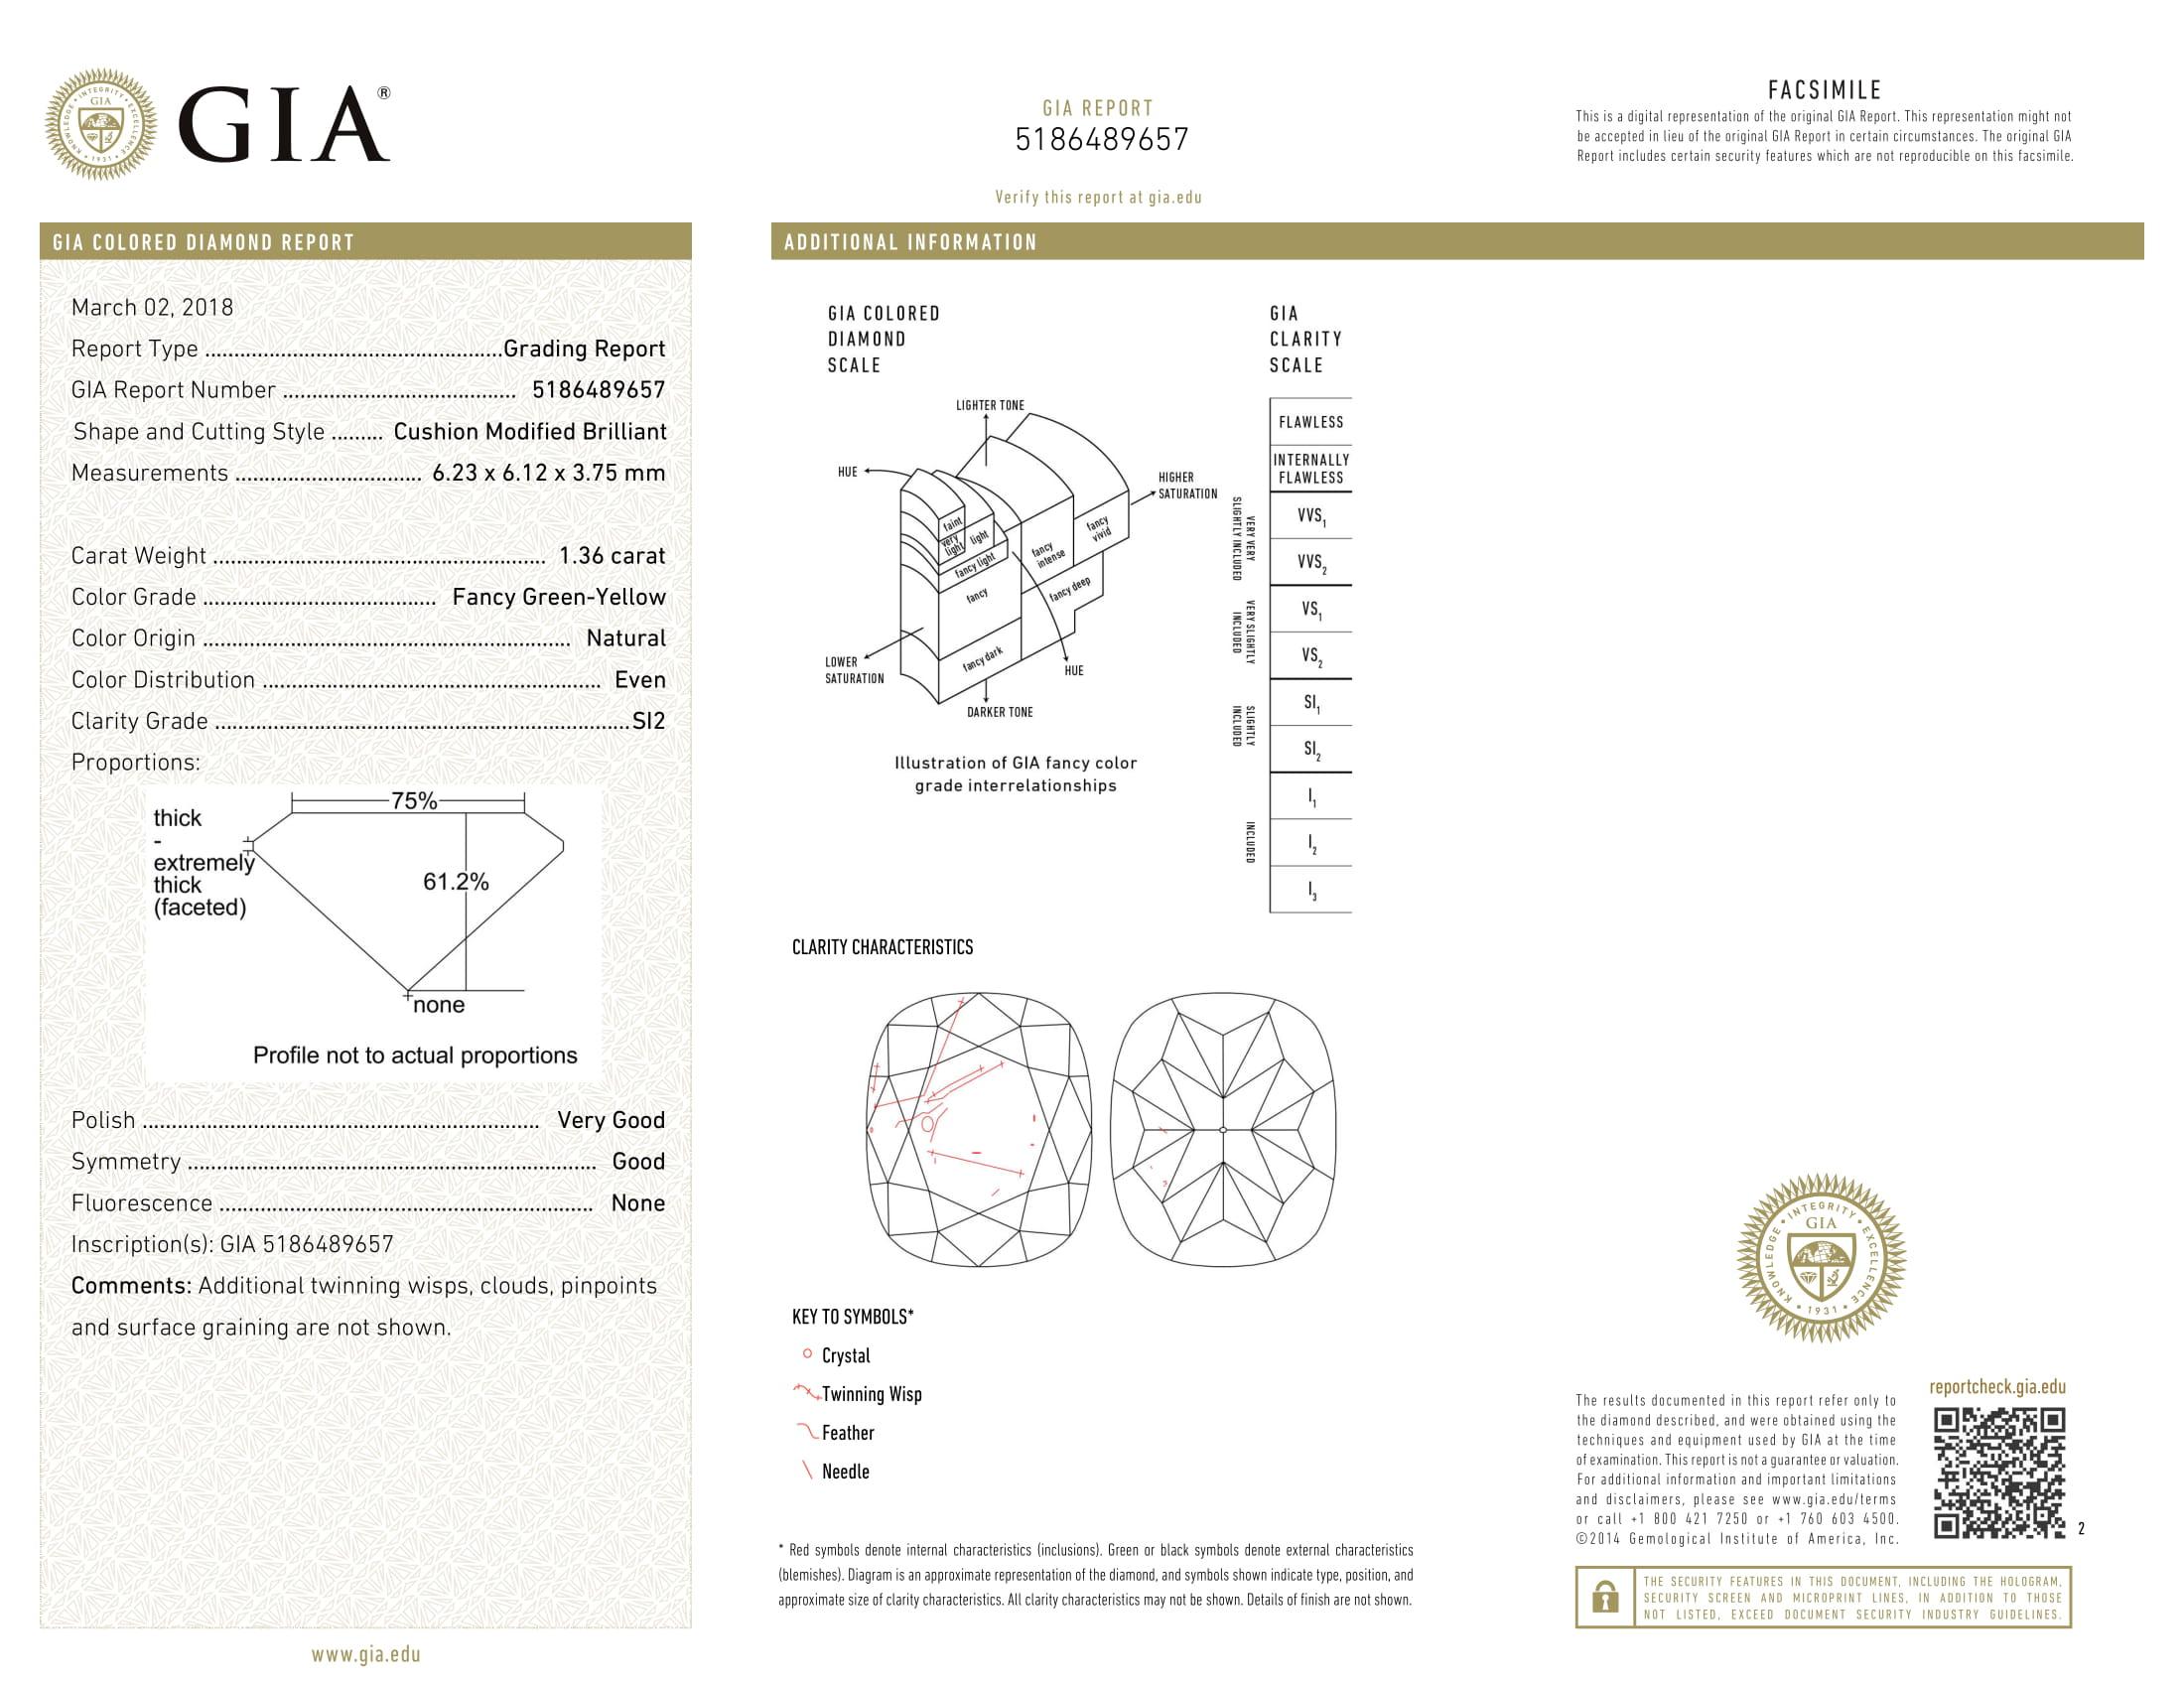 GIA Certified White Gold Fancy Green Cushion Cut Diamond Ring, 2.32 Carat For Sale 2